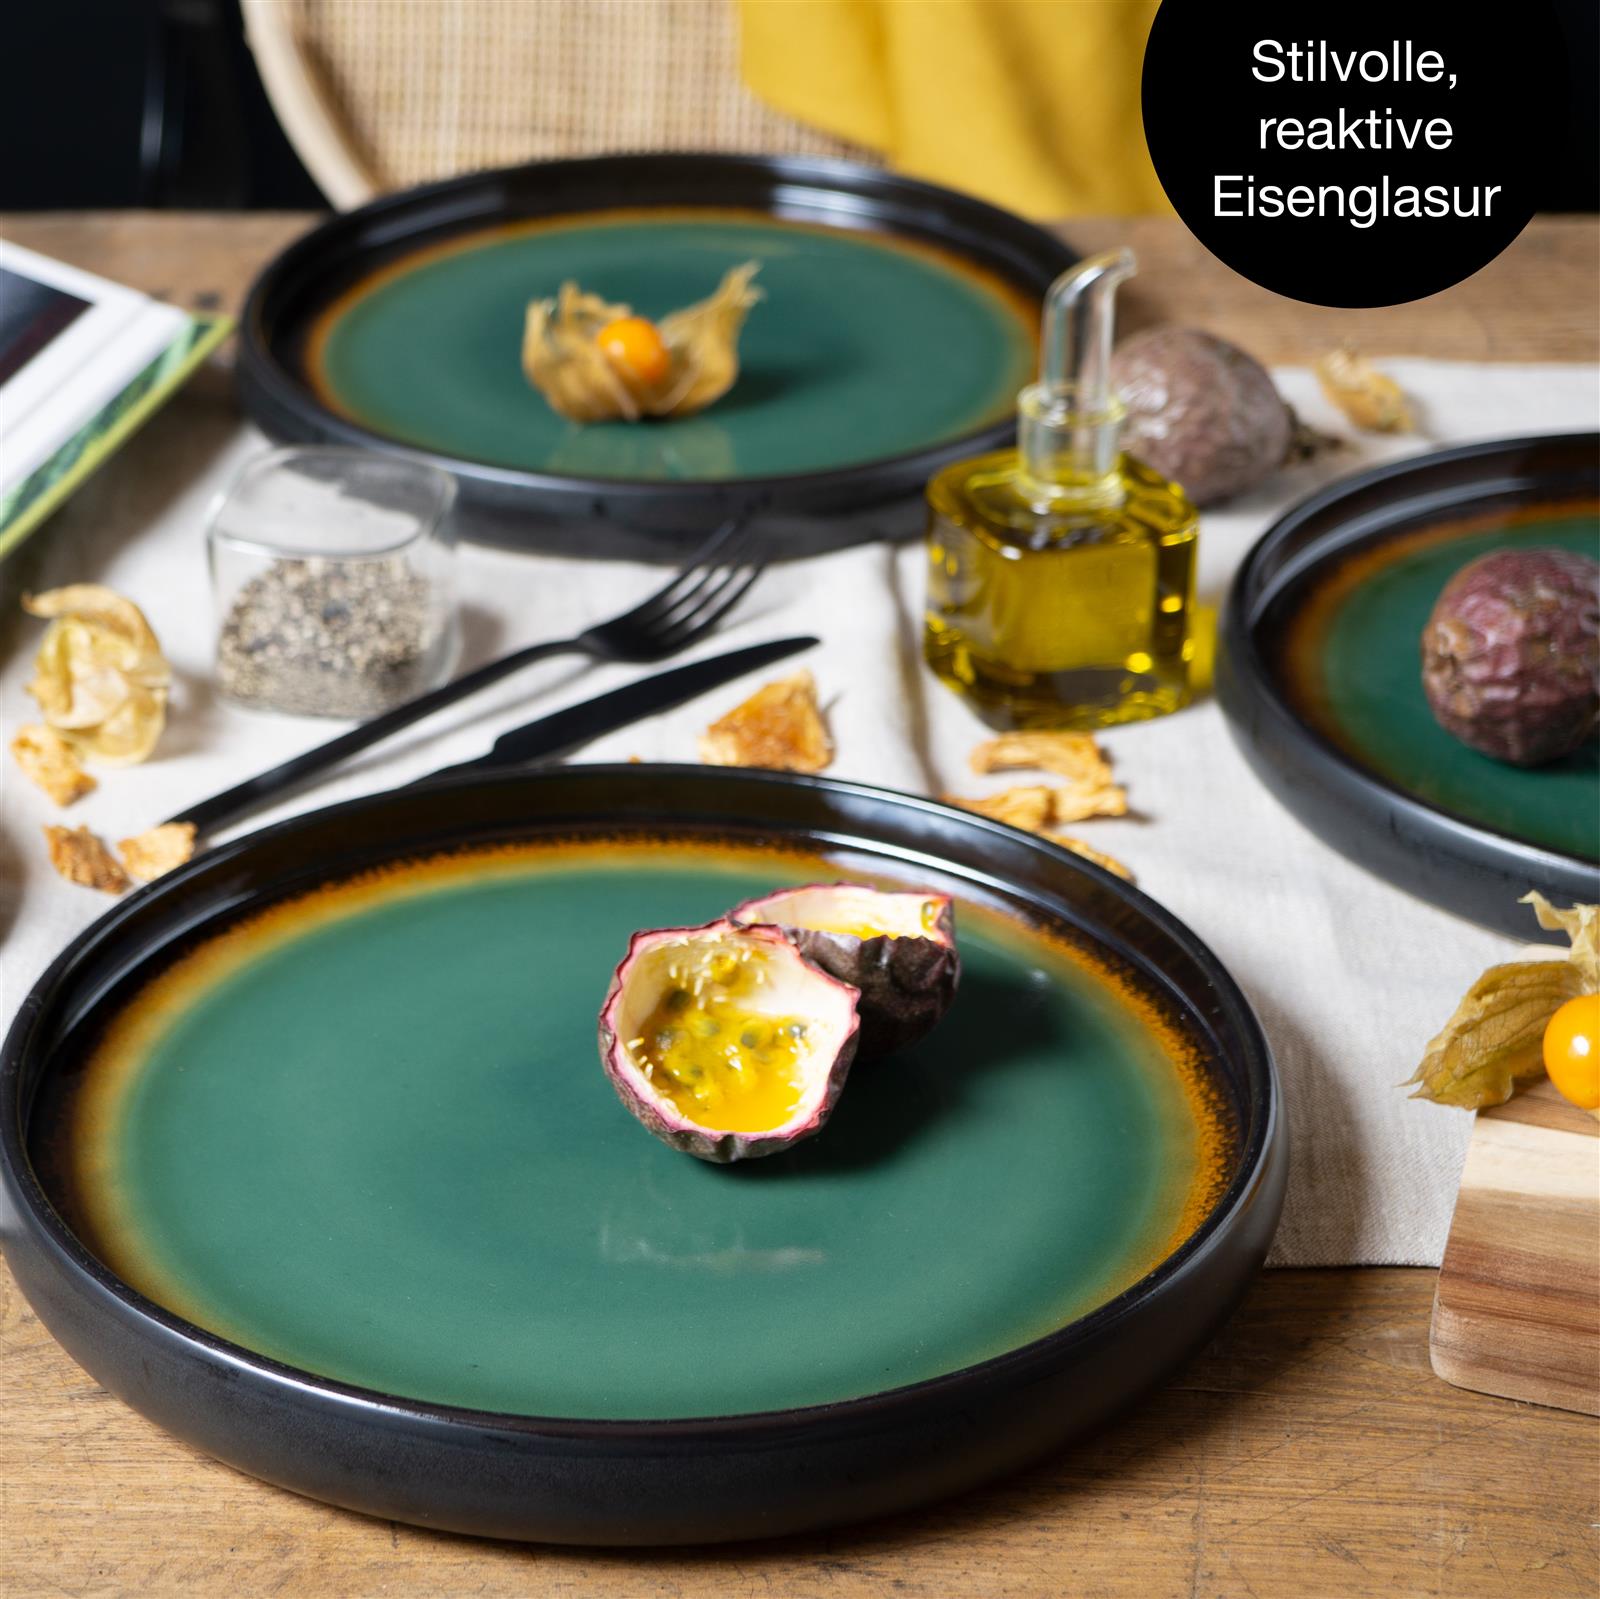 SOLID 4x Dinner Teller grün-Braun Geschirr Set Reaktiv